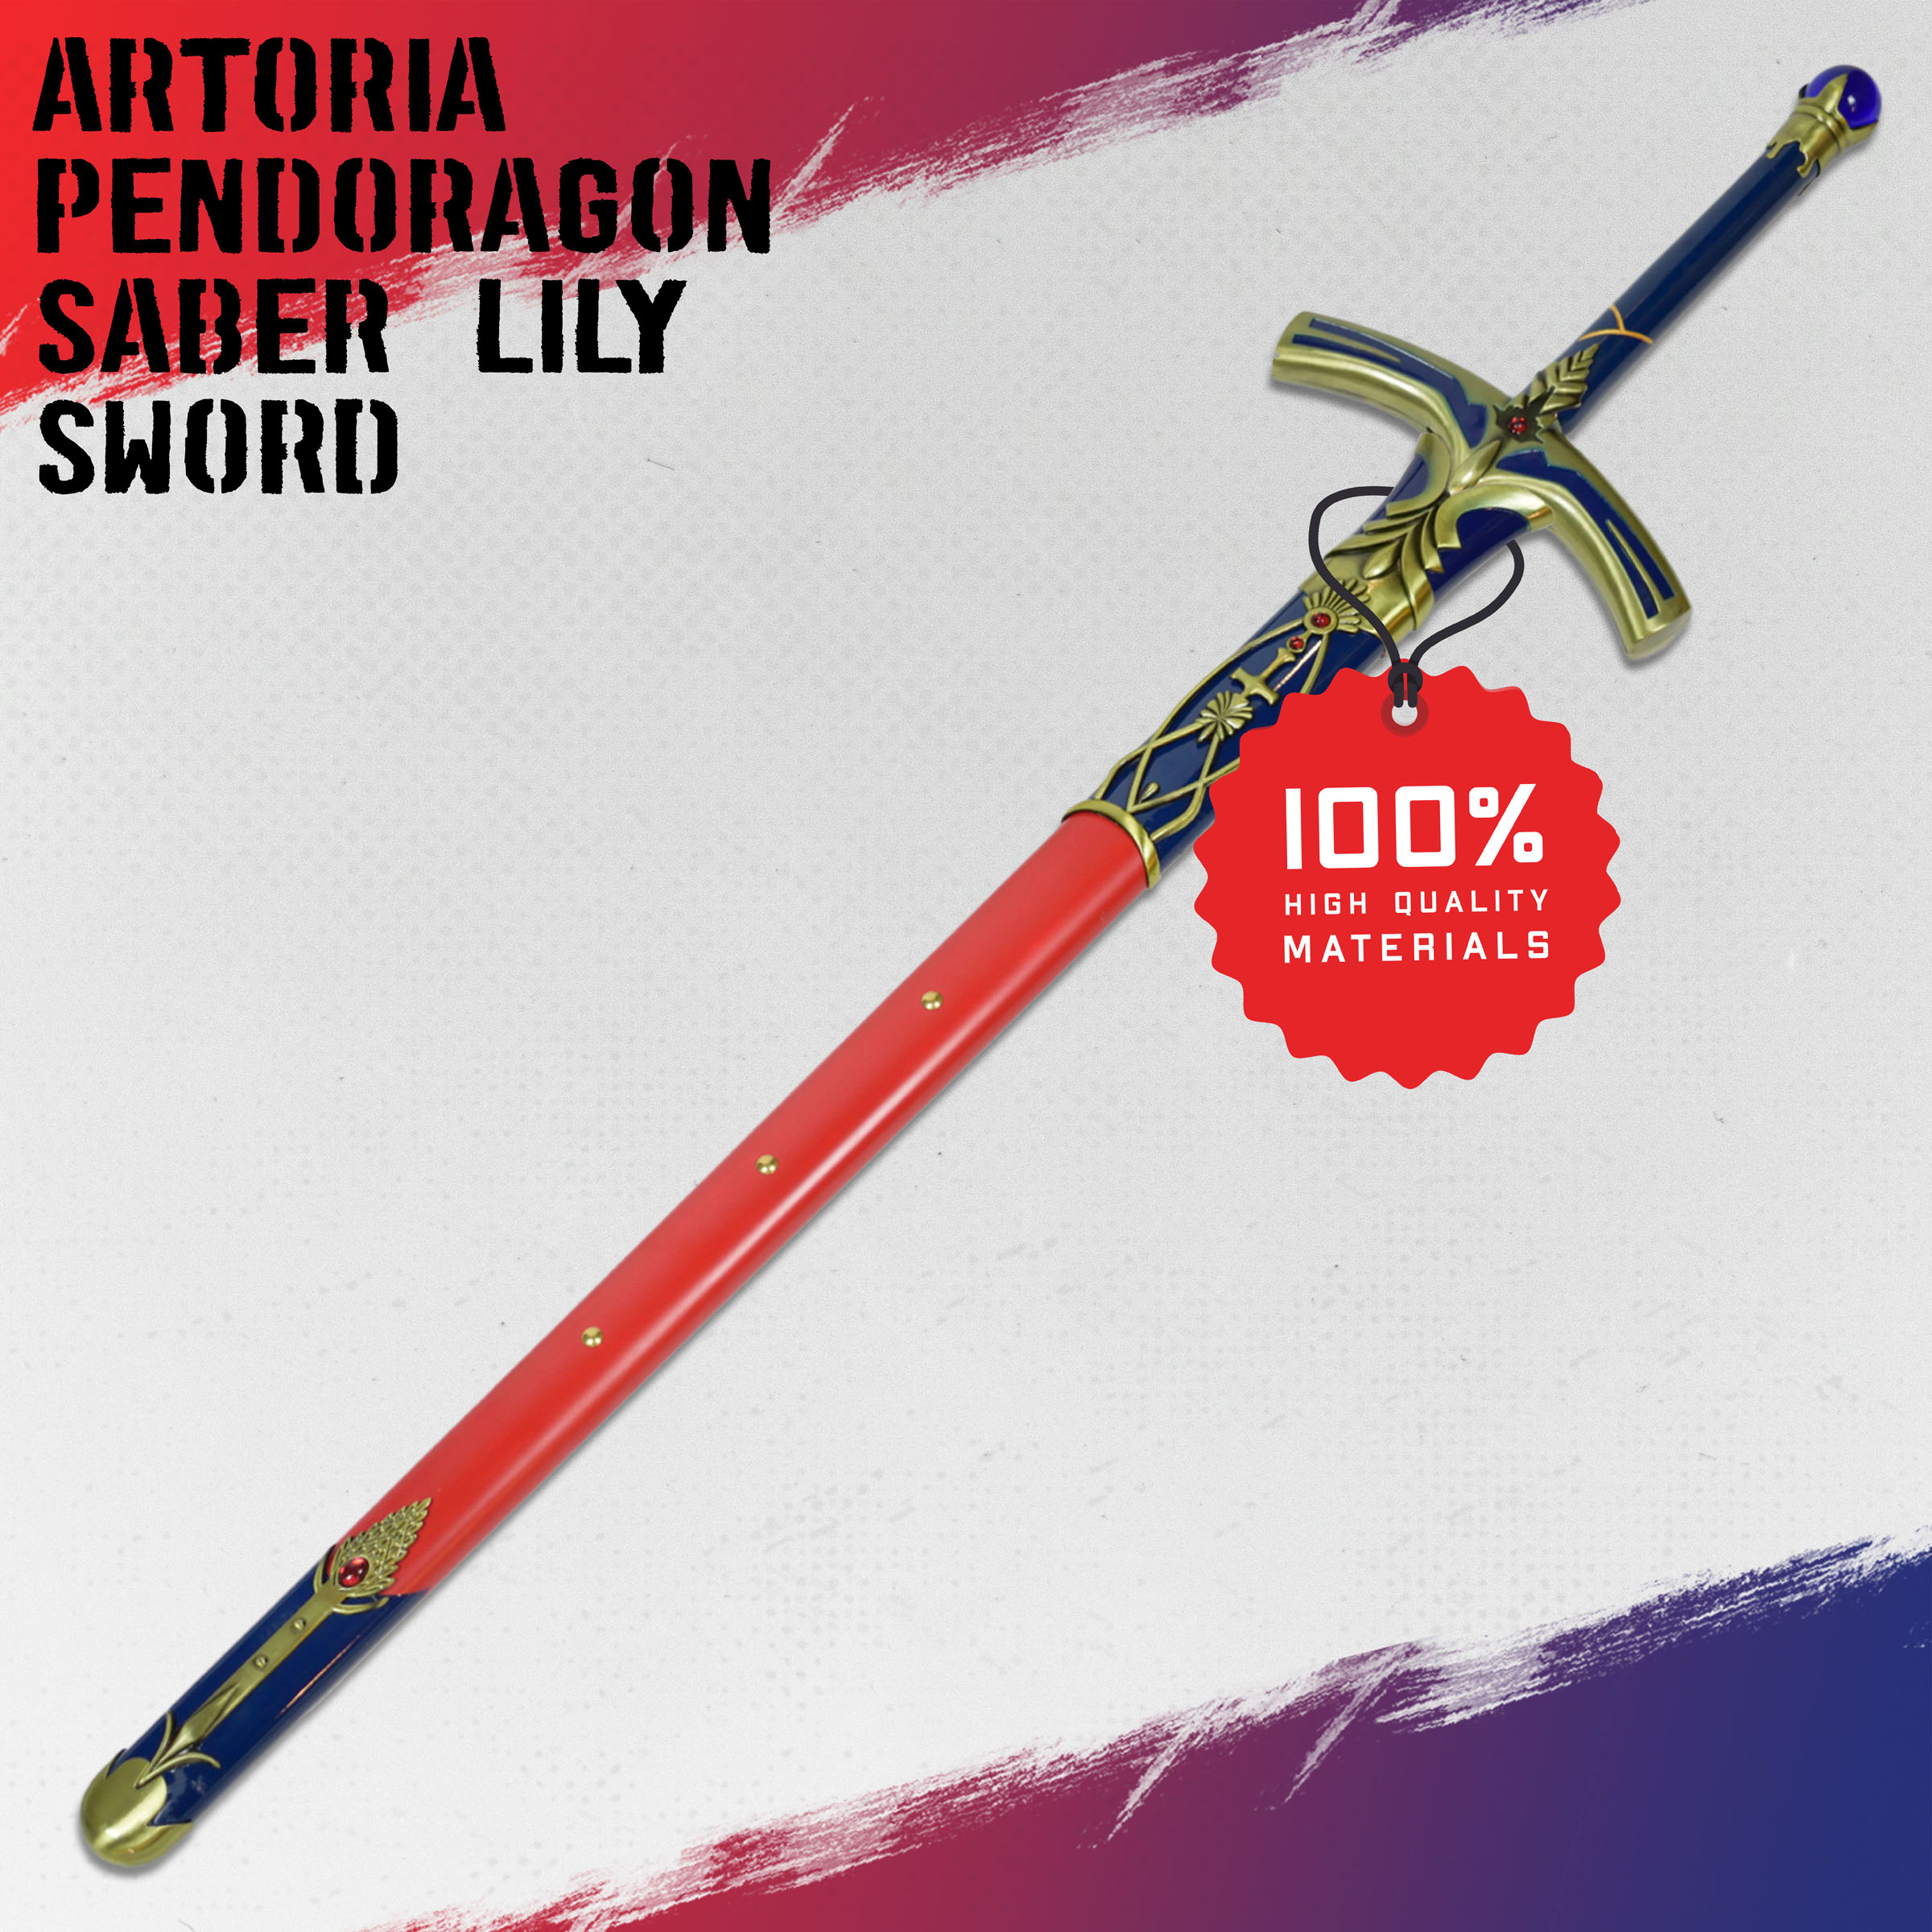 Fate/Stay Night - Artoria Pendoragon Saber Lily Sword